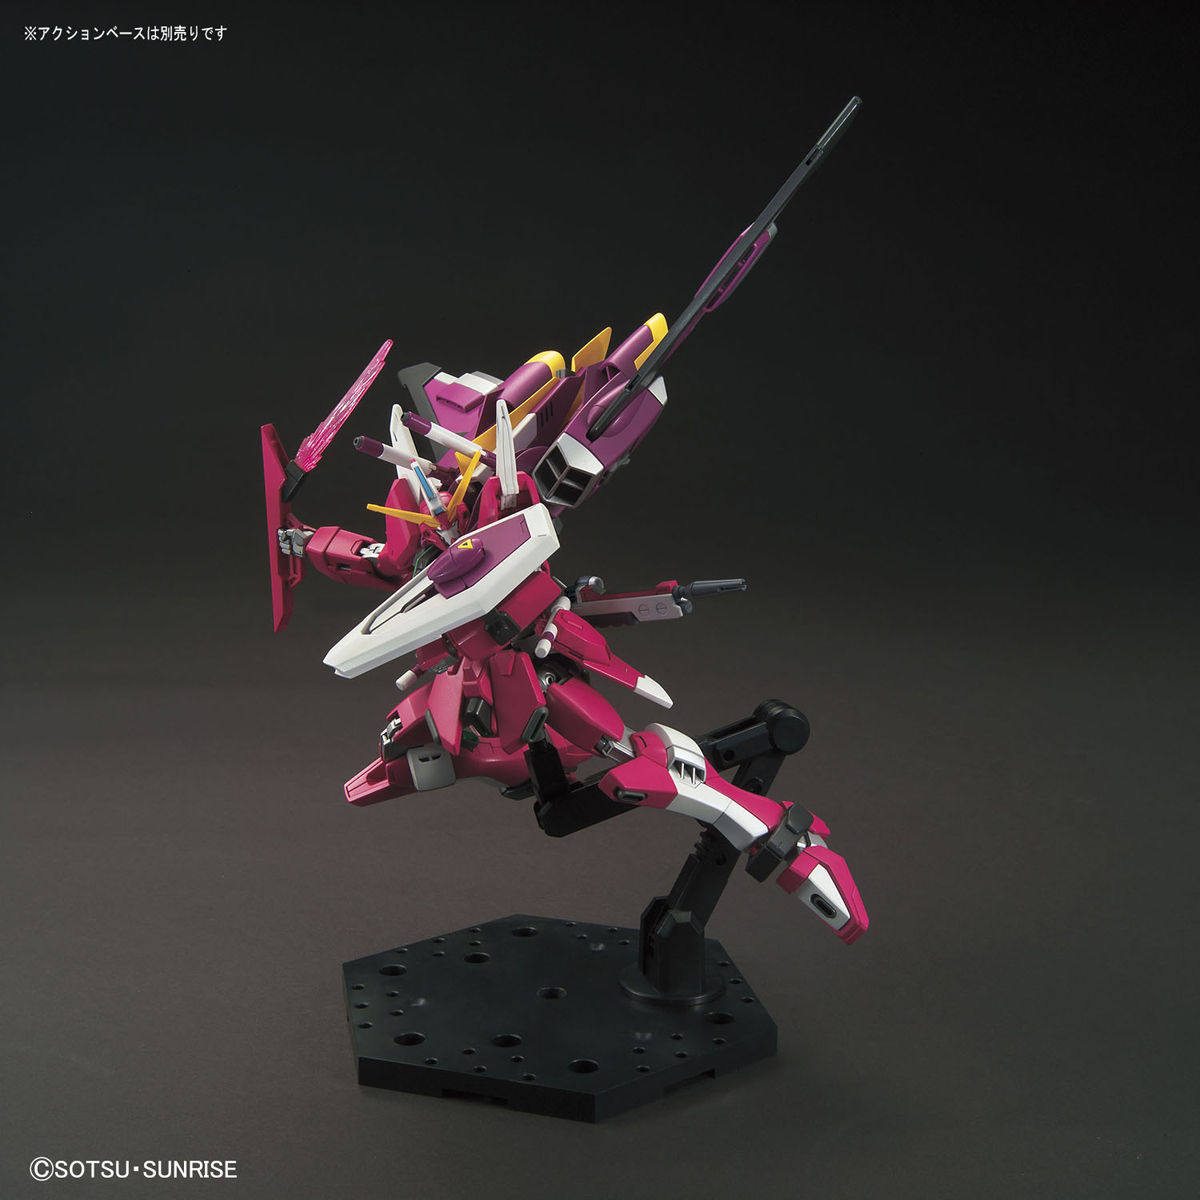 Bandai Spirits HG Infinite Justice Gundam Clear Color for sale online 